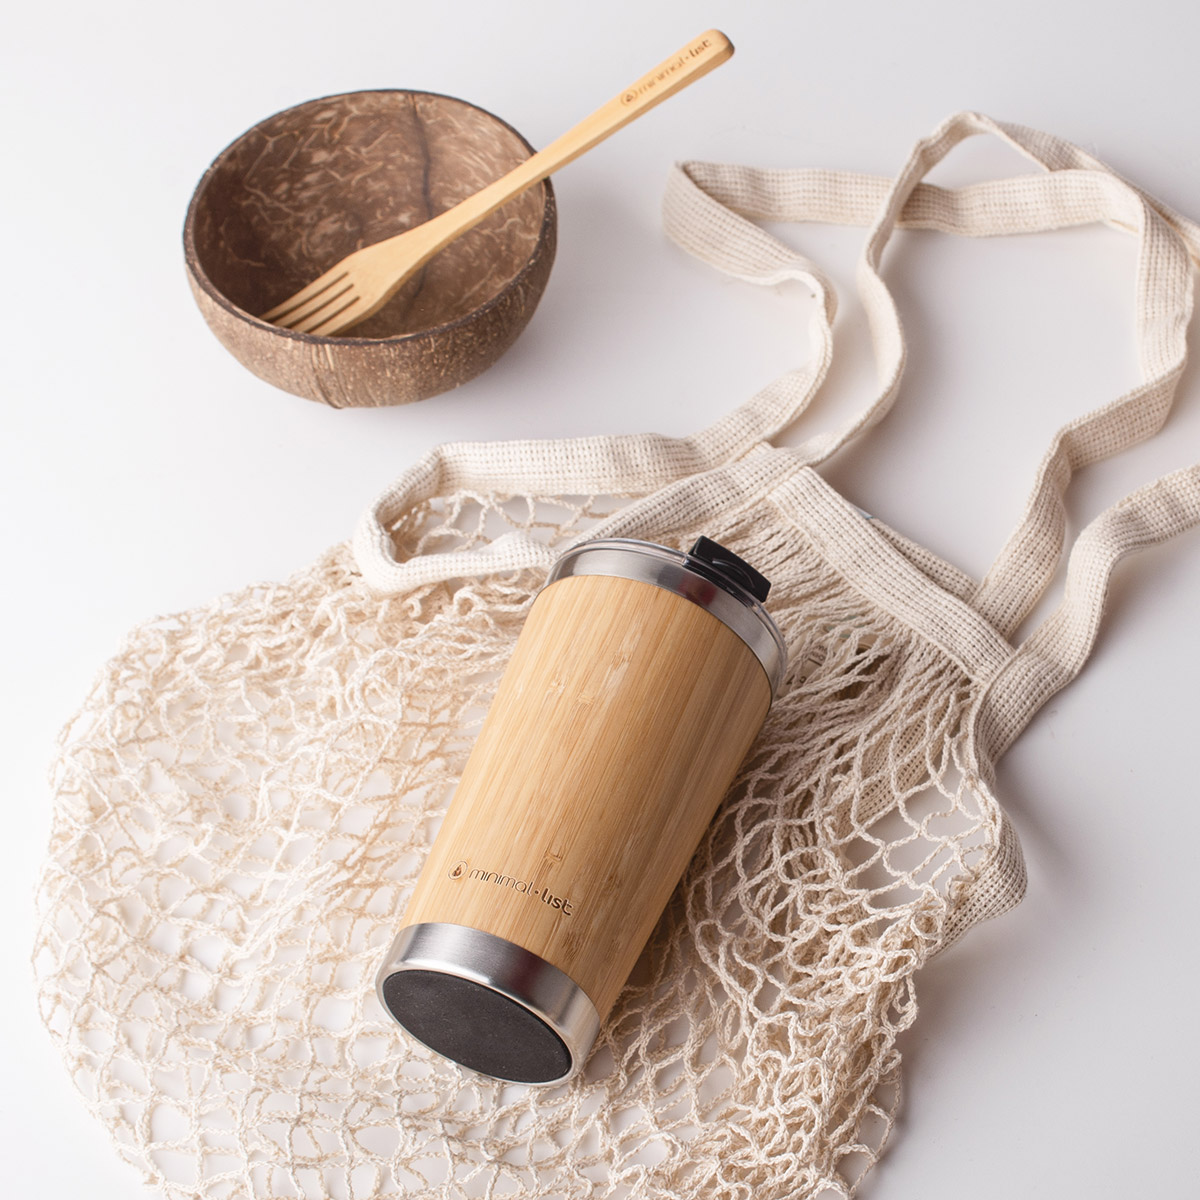 MINIMAL LIST Θερμός – ποτήρι 400ml με μόνωση κενού αέρος και επένδυση ξύλου bamboo